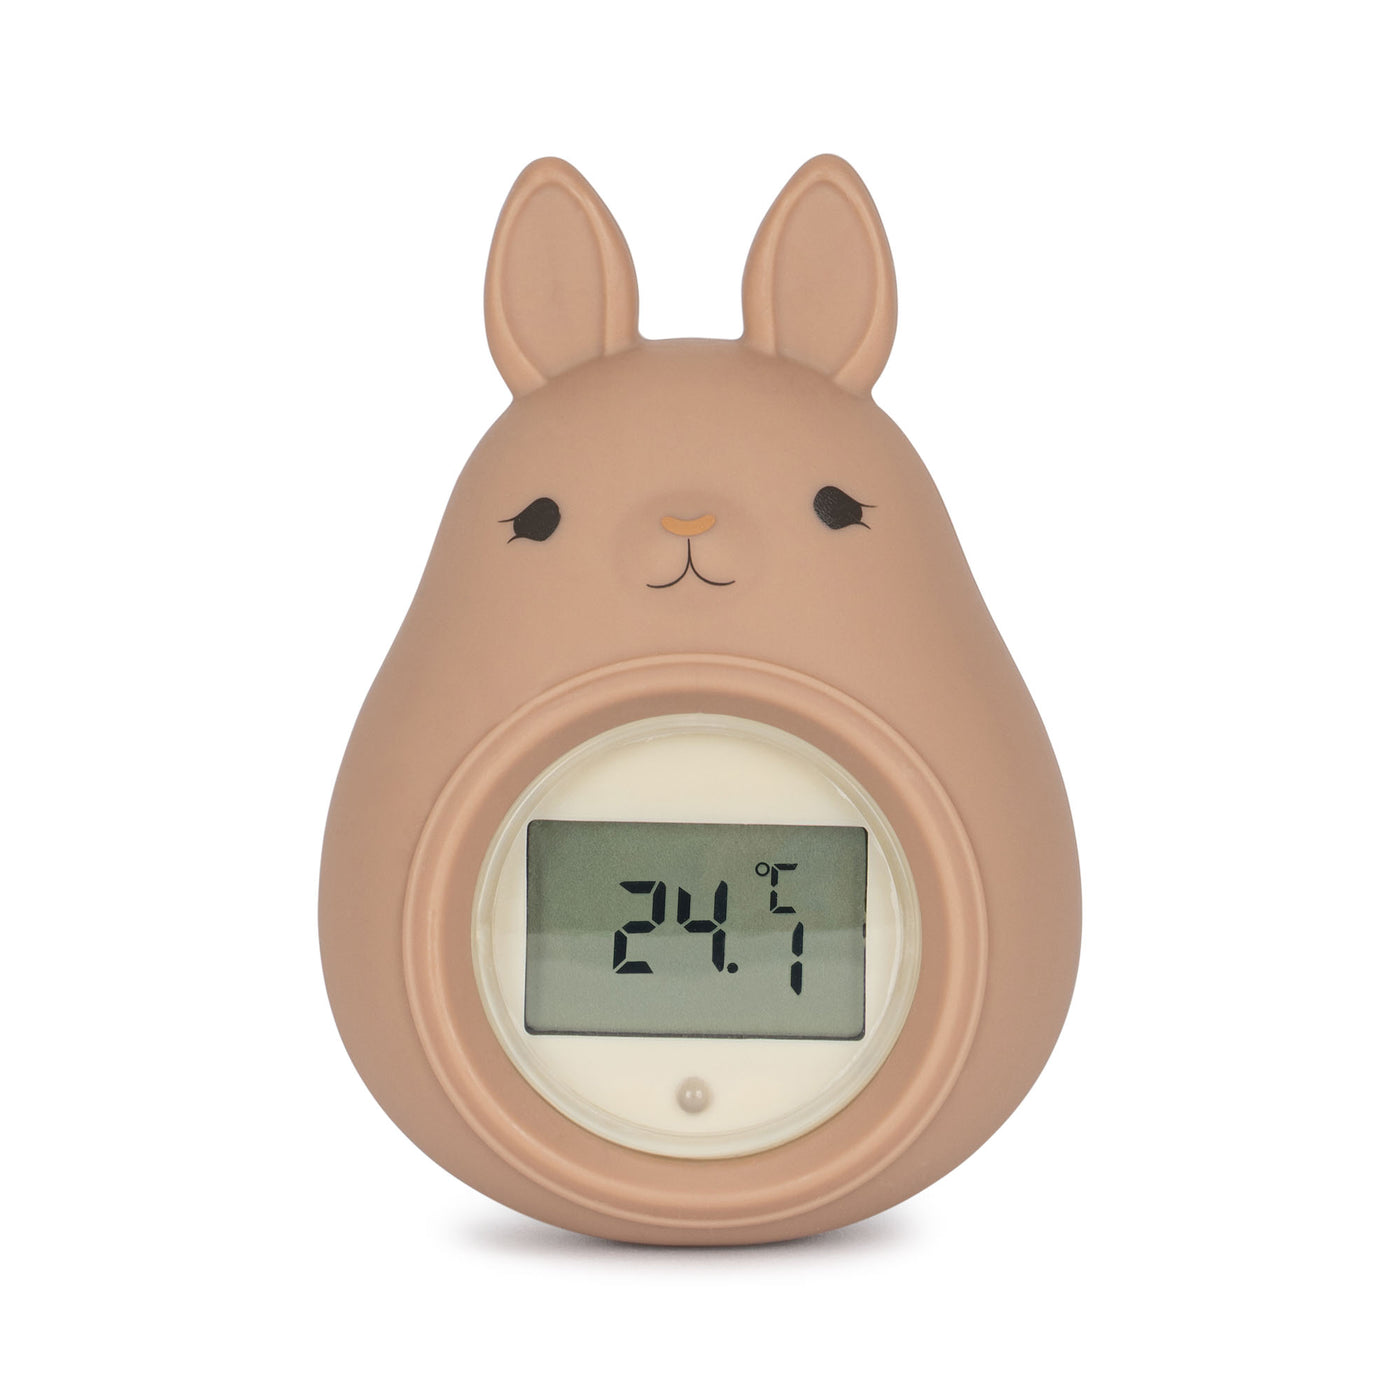 Bunny bath thermometer (KS5145)